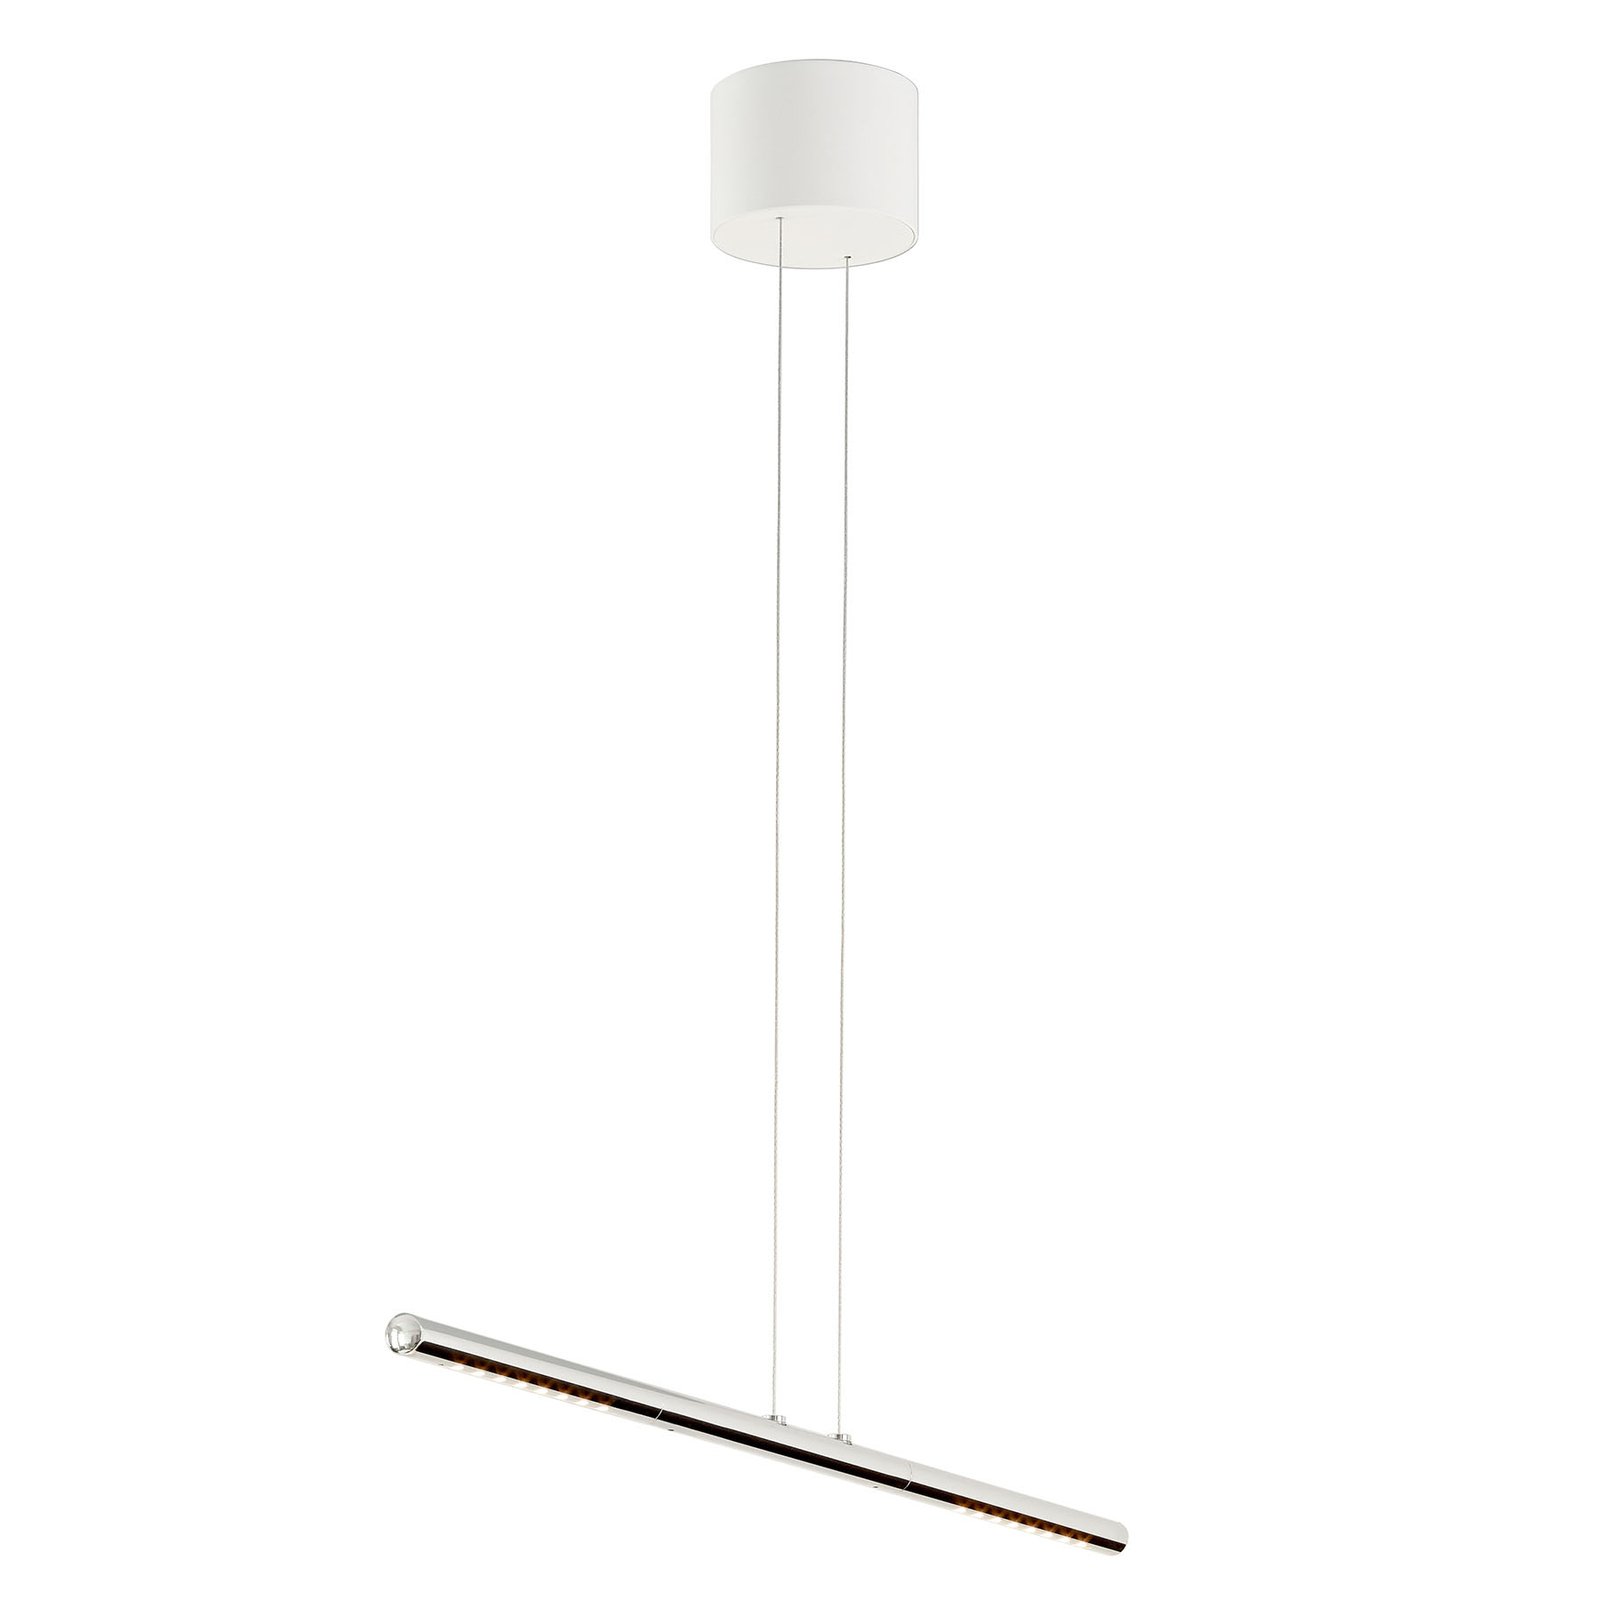 TECNOLUMEN LUM S hanglamp, 85 cm, chroom